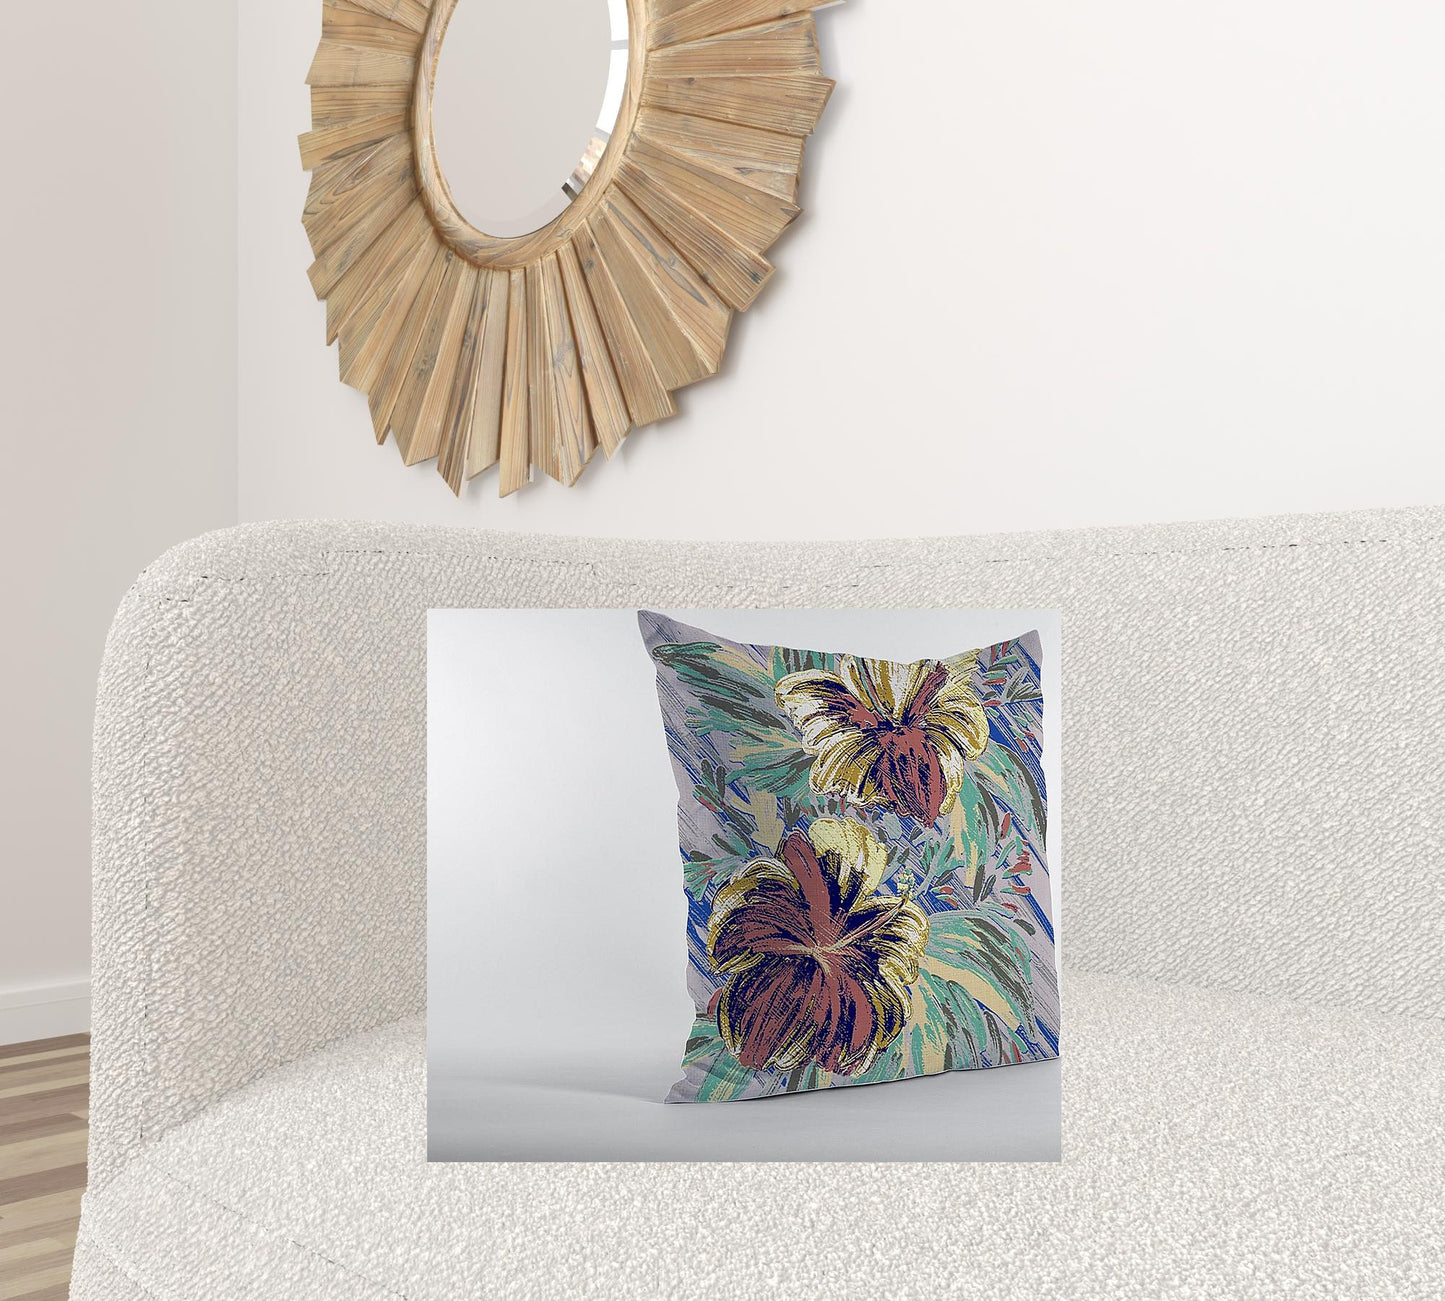 18” Terracotta Hibiscus Suede Decorative Throw Pillow